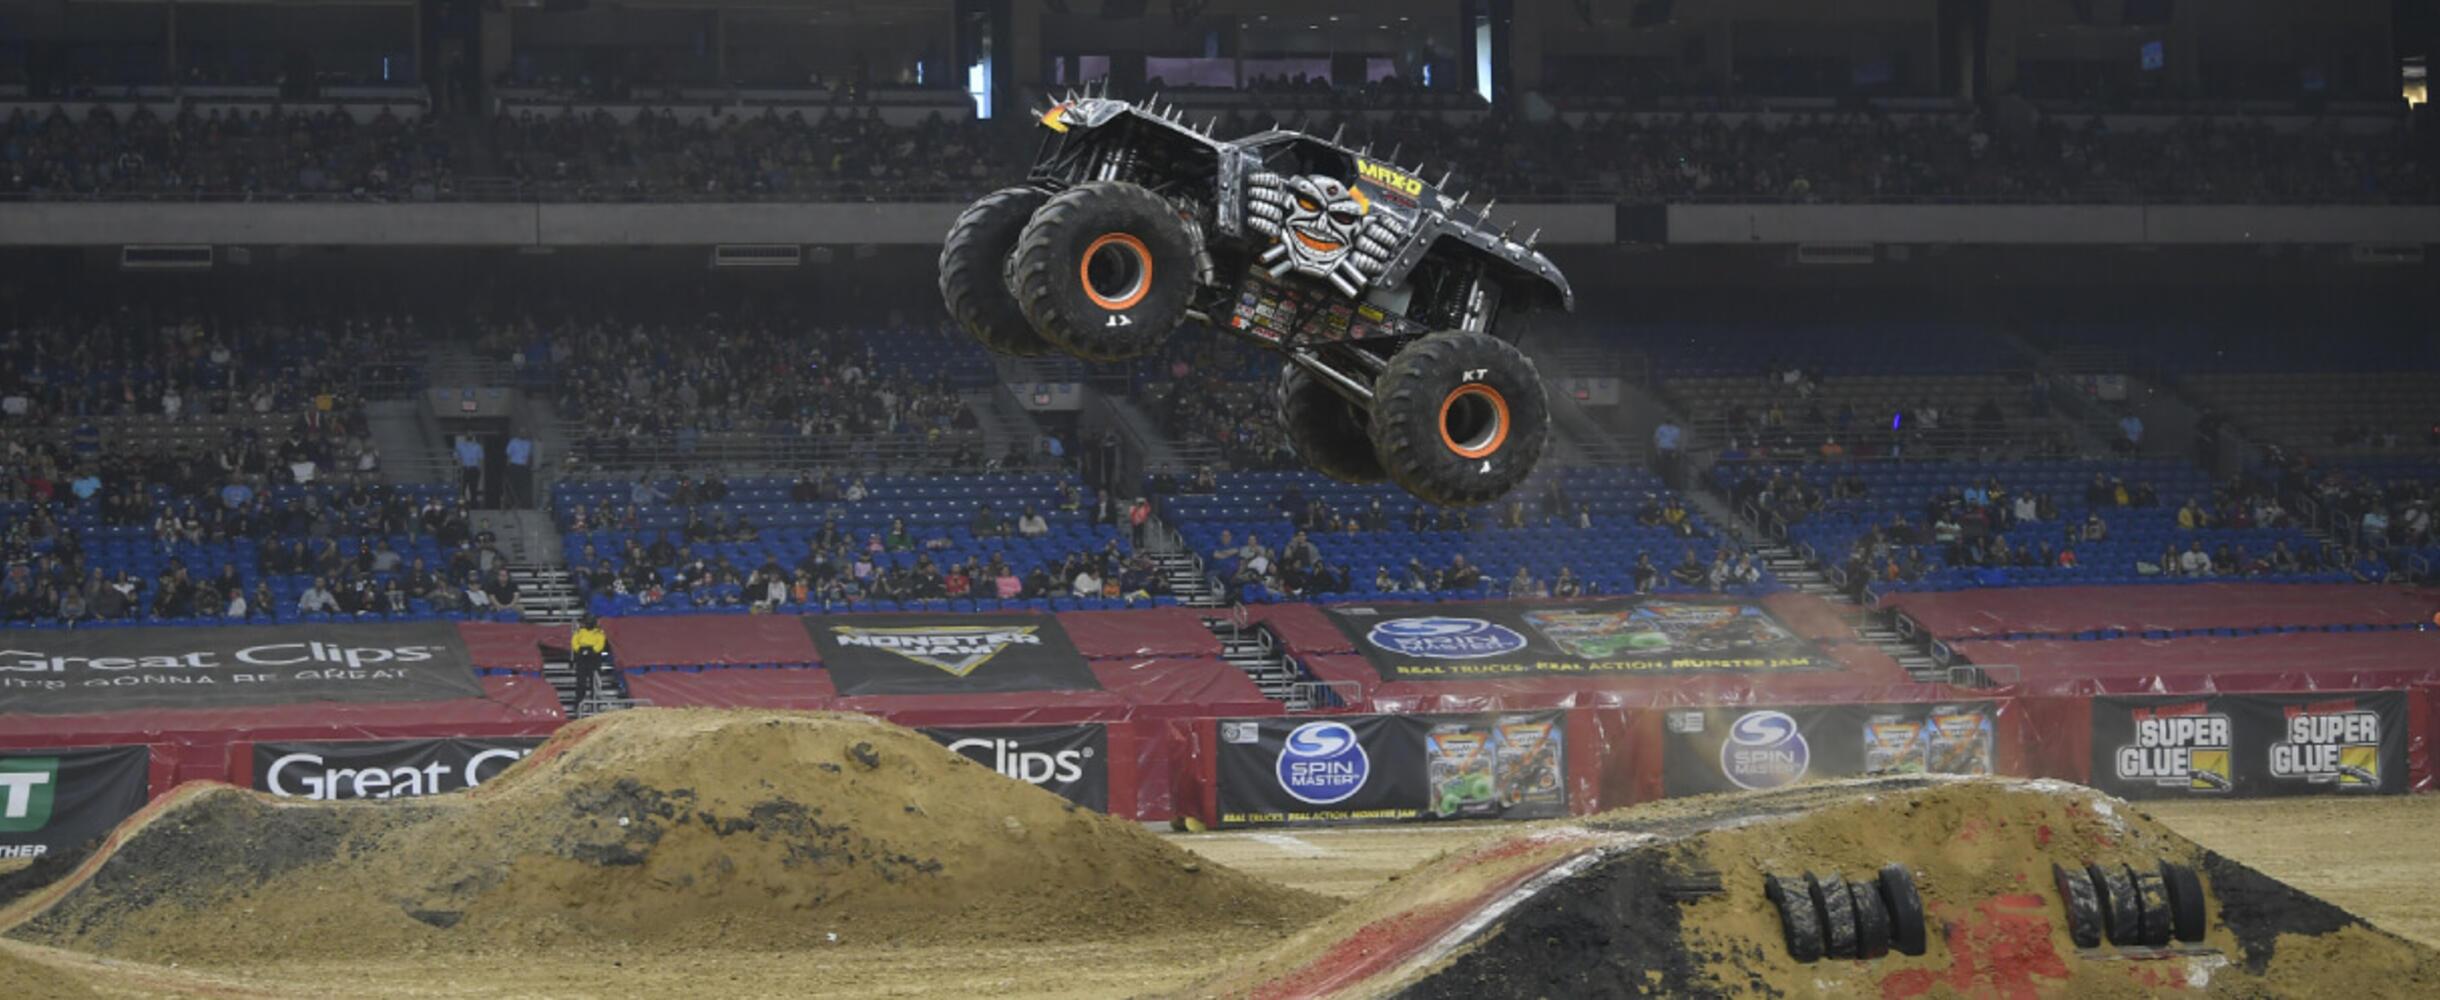 A Monster Jam truck flies high in the air over a jump